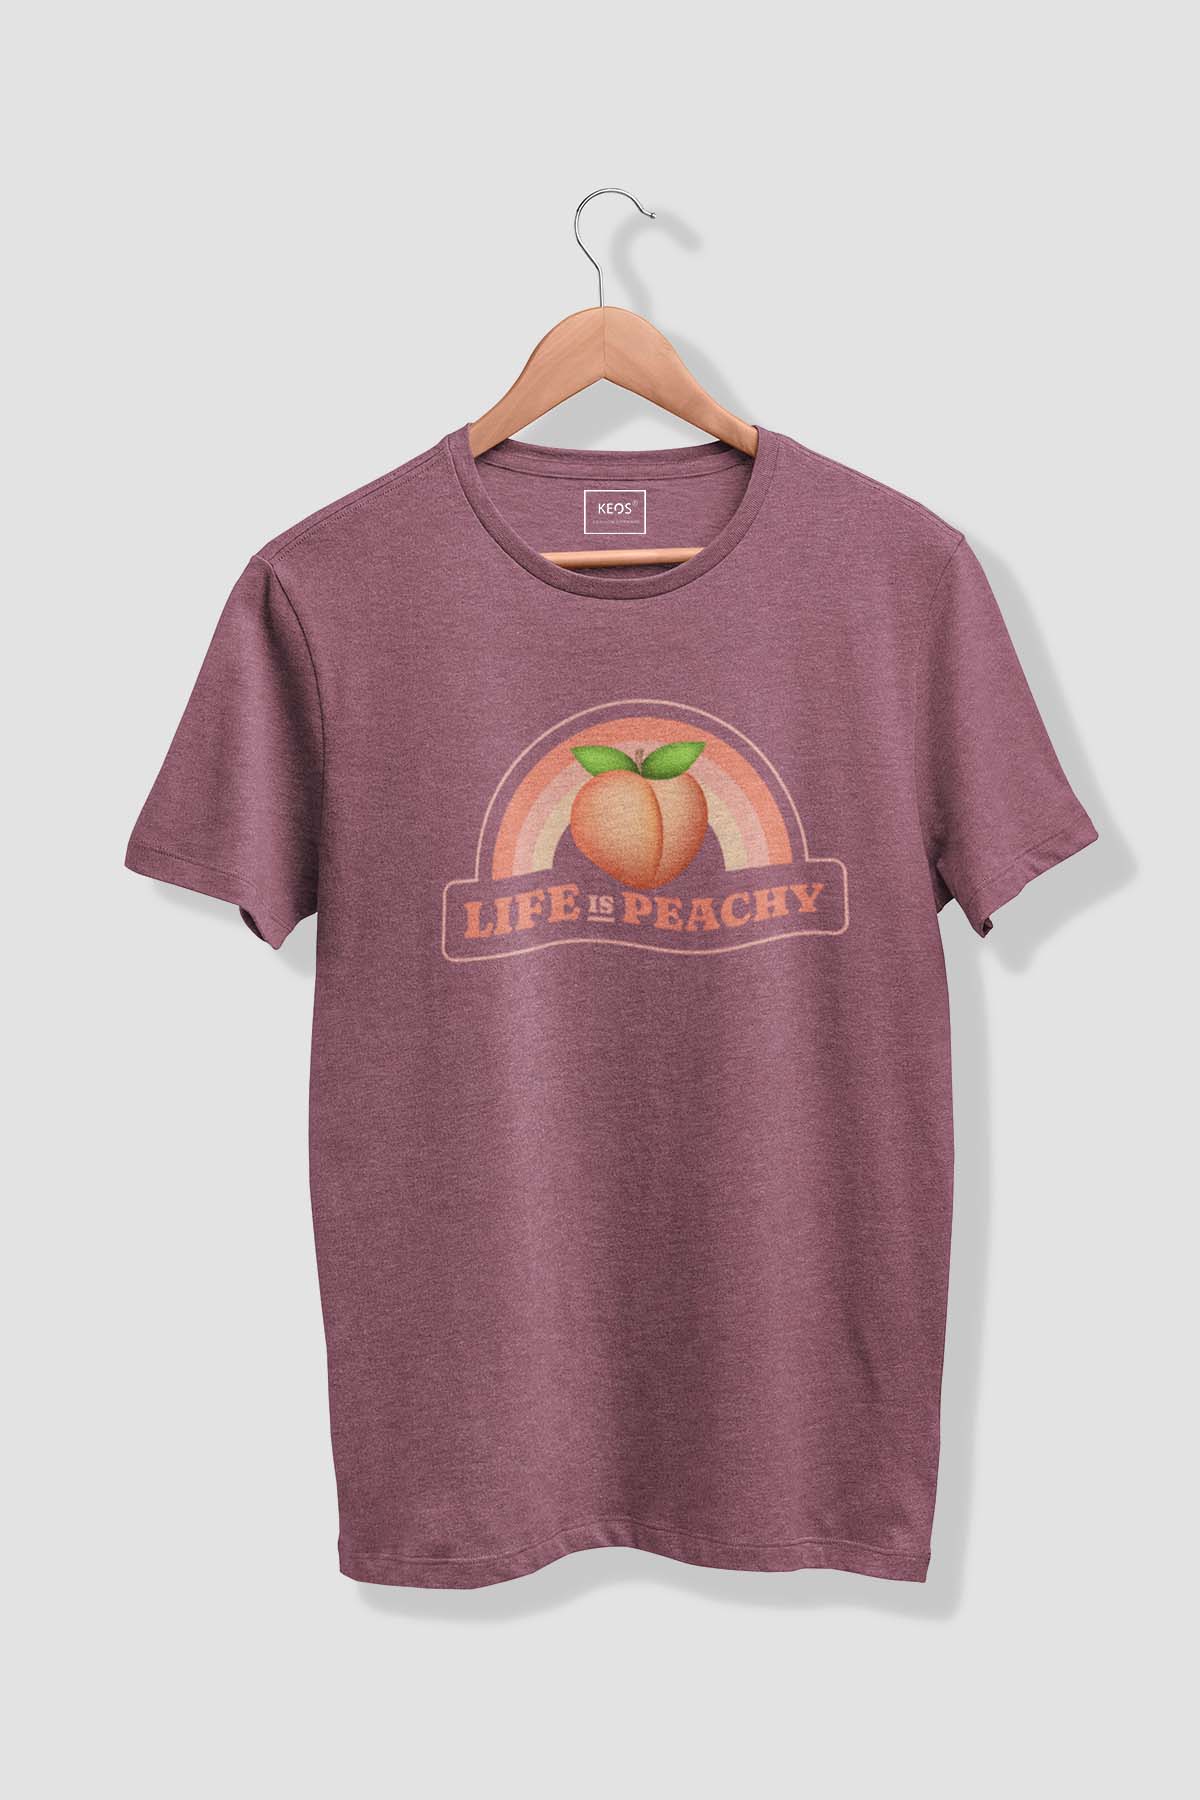 Life Is Peachy - Melange Cotton T-shirt - keos.life